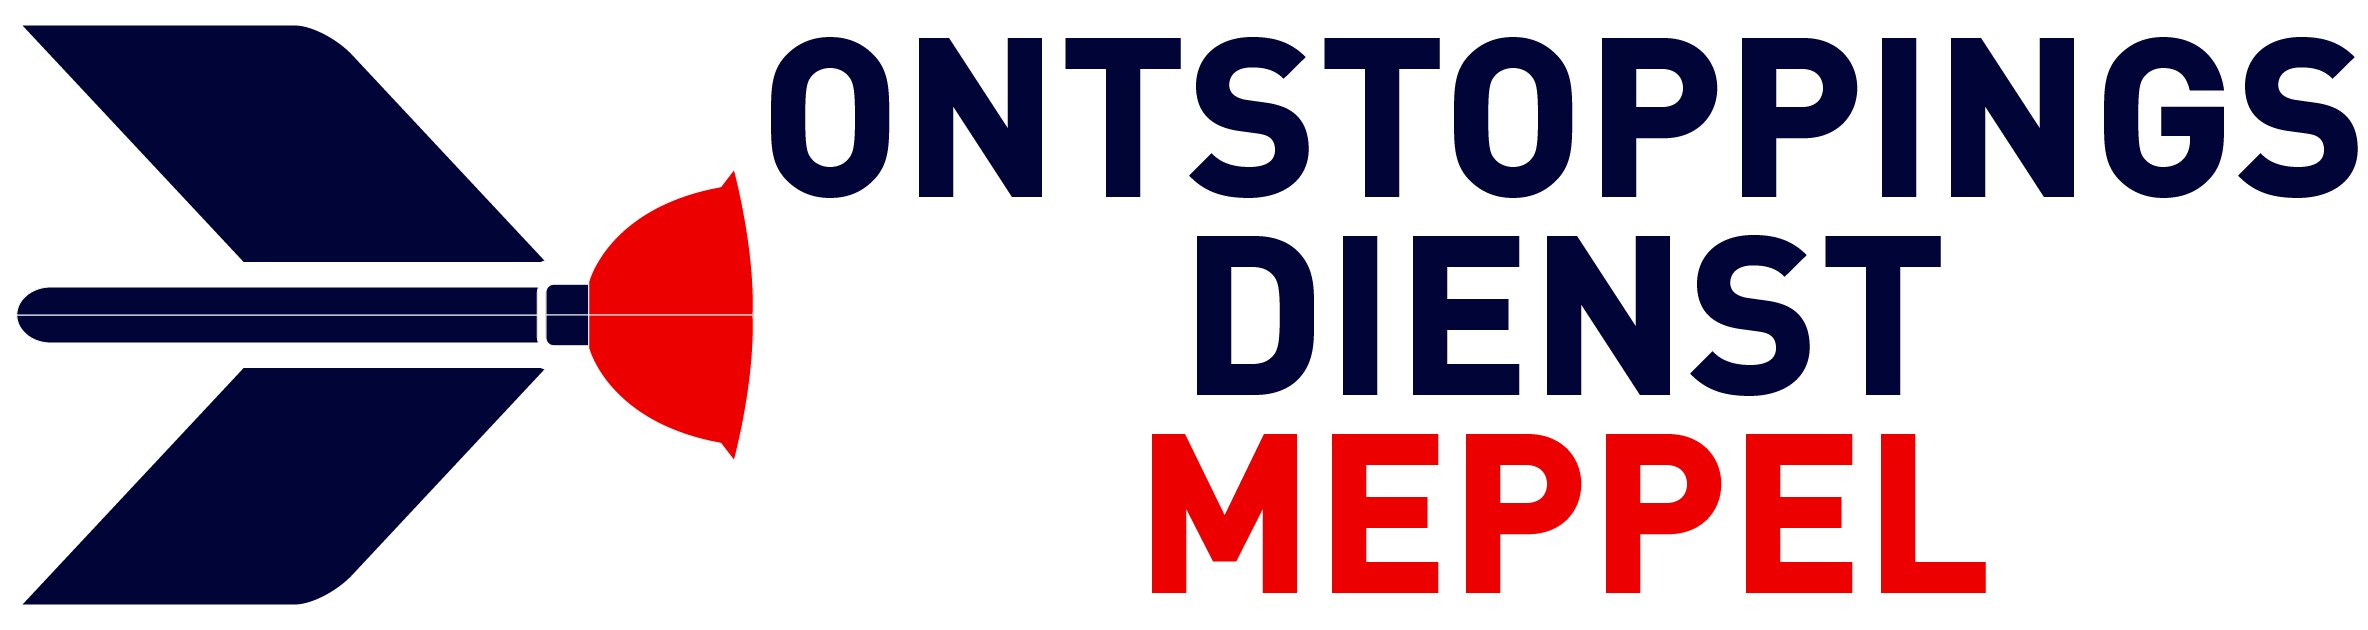 Ontstoppingsdienst Meppel logo